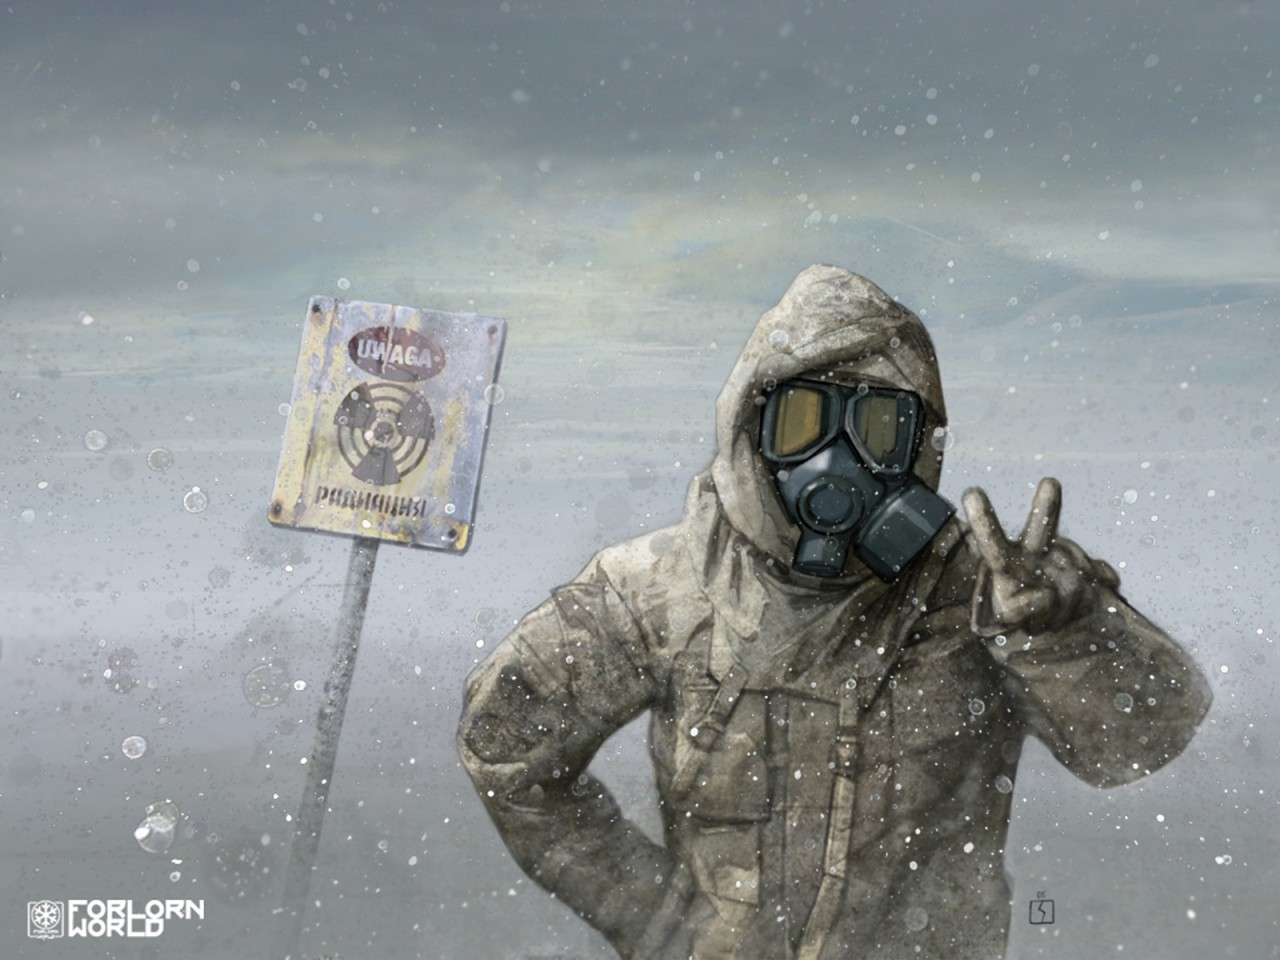 General 1280x960 gas masks peace sign radioactive humor apocalyptic Polish symbols winter frontal view